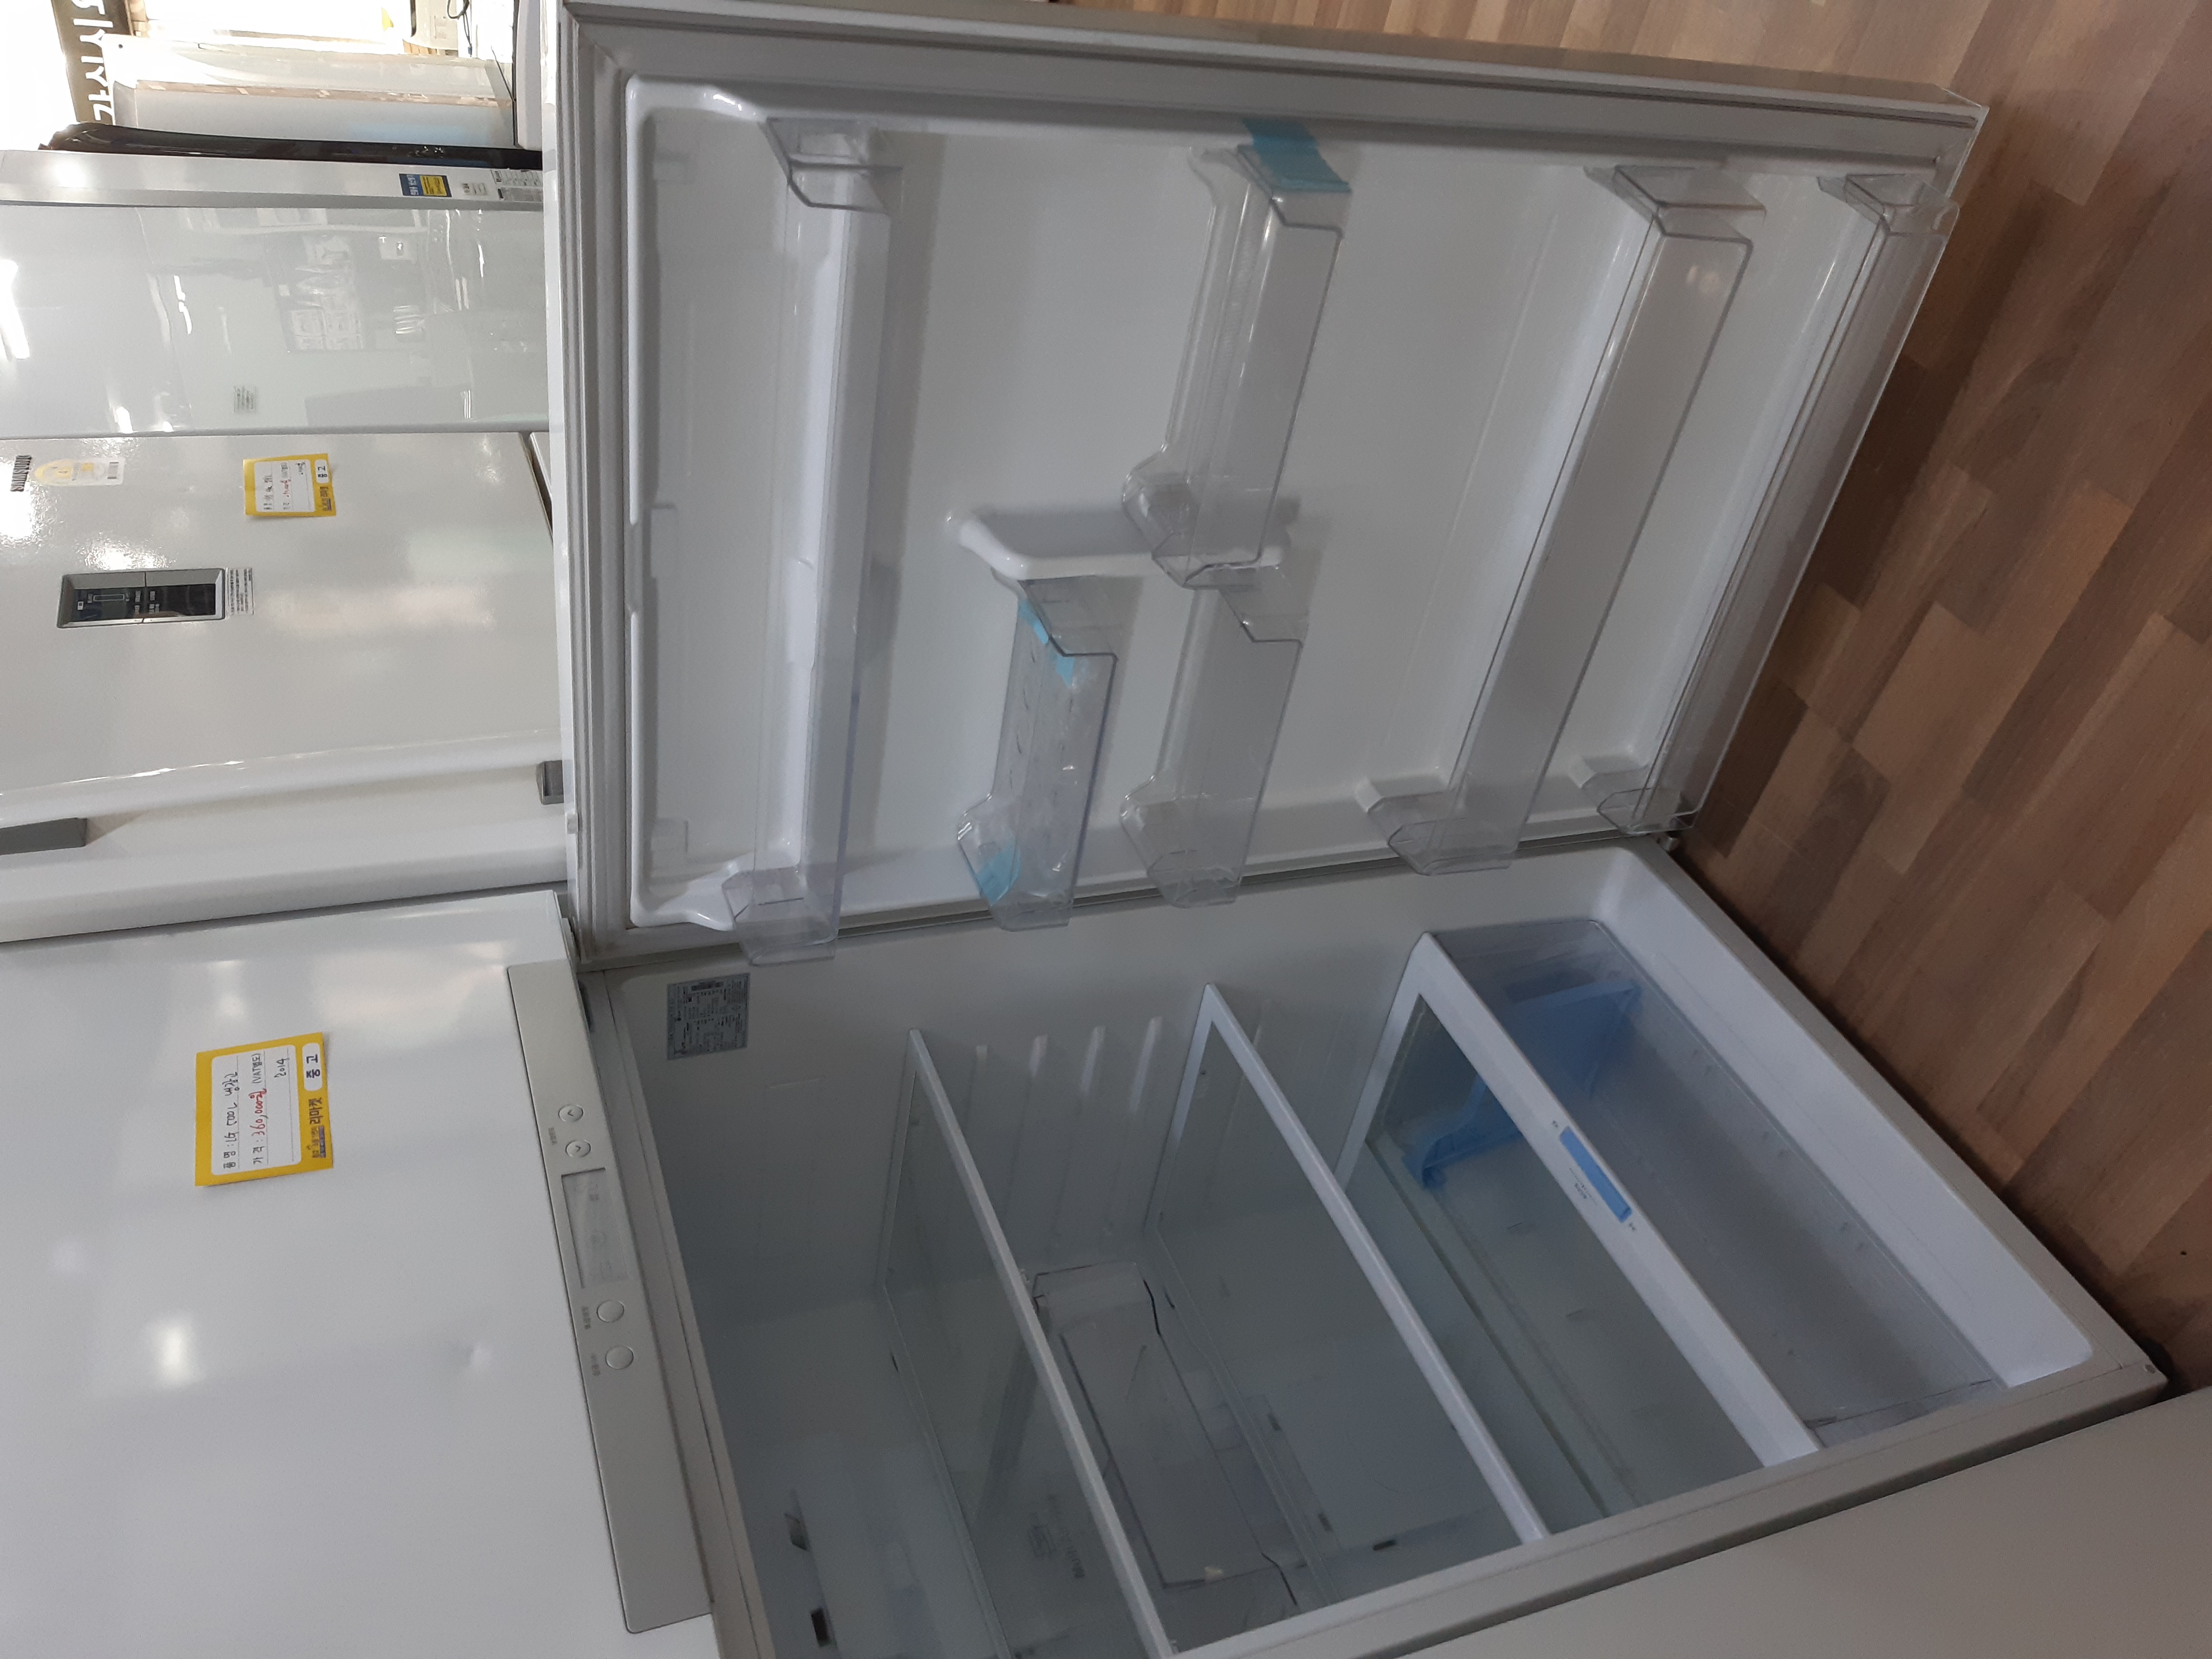 LG 500L 냉장고